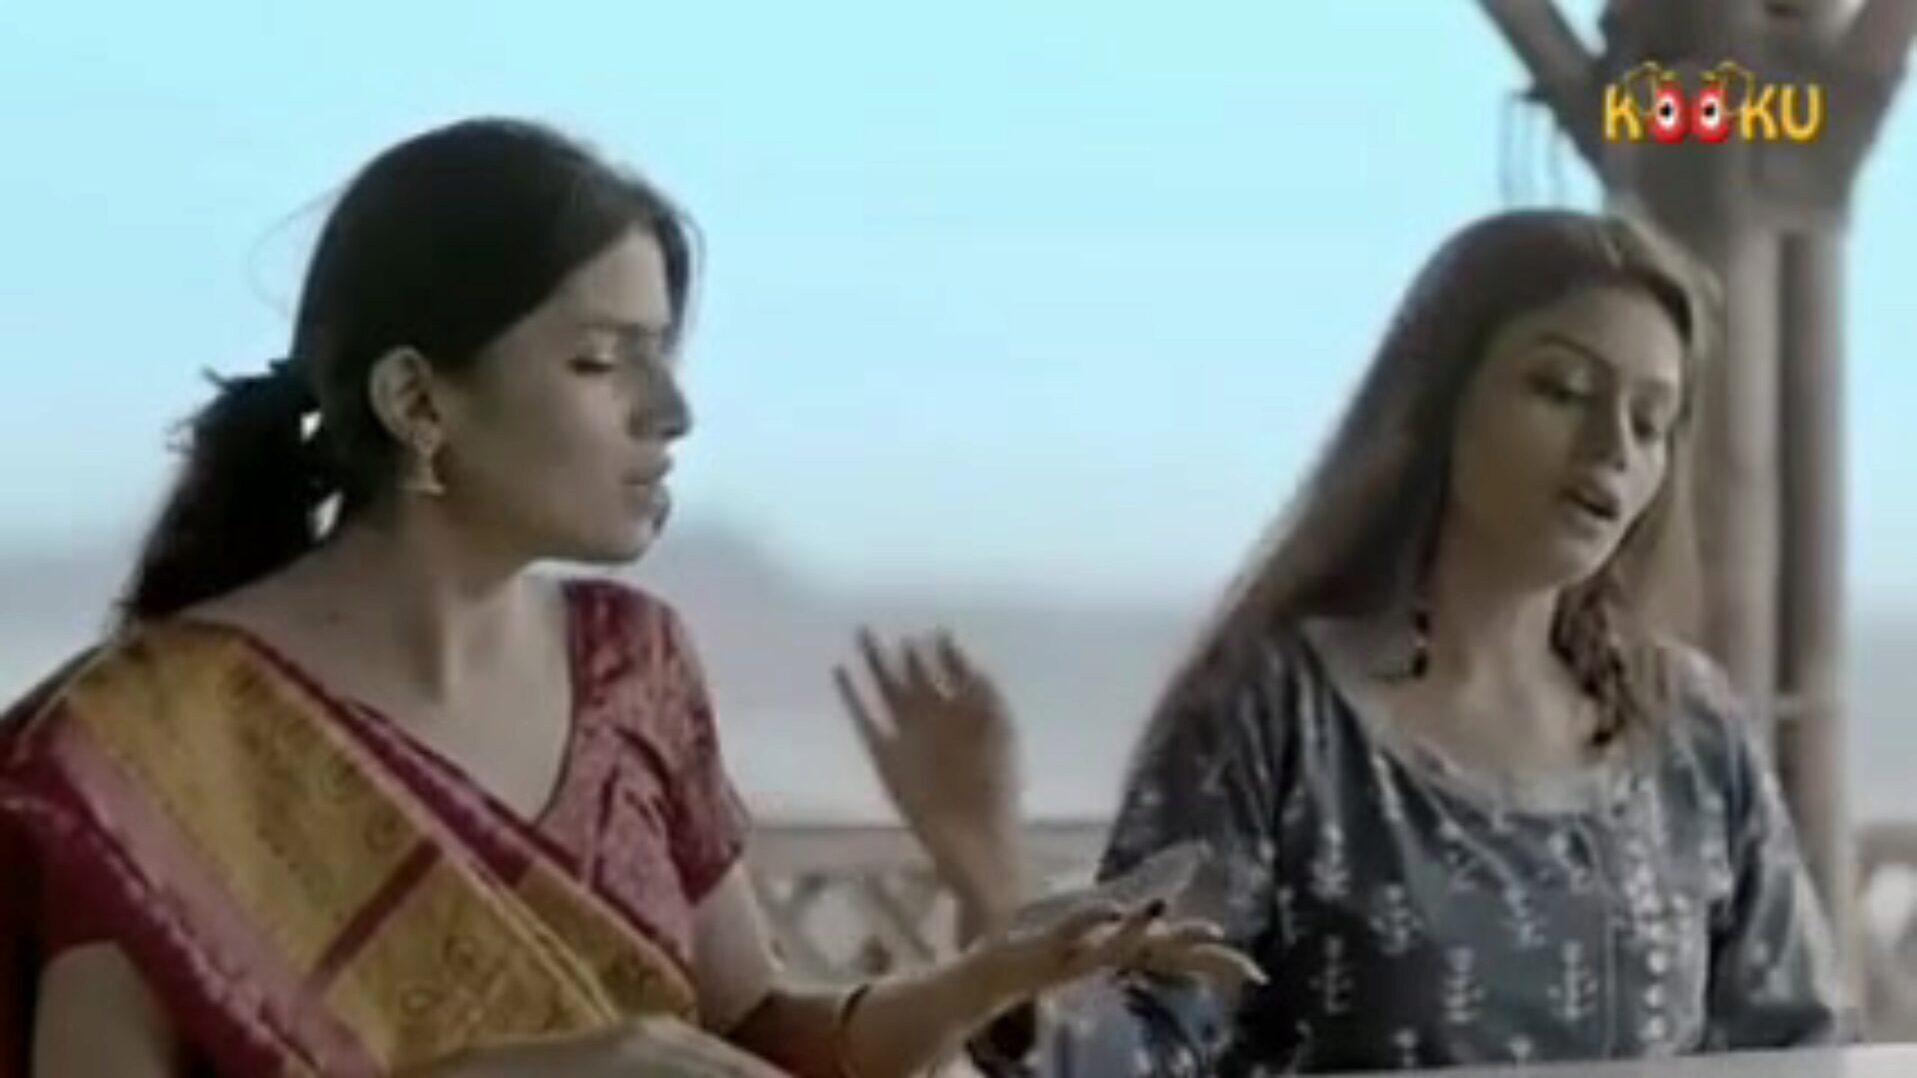 nidhi mahawan et divya singh chaud dans la scène du film shadi vivah kukoo nidhi mahawan et divya singh idiot et piller les gens en les mariant et en les baisant